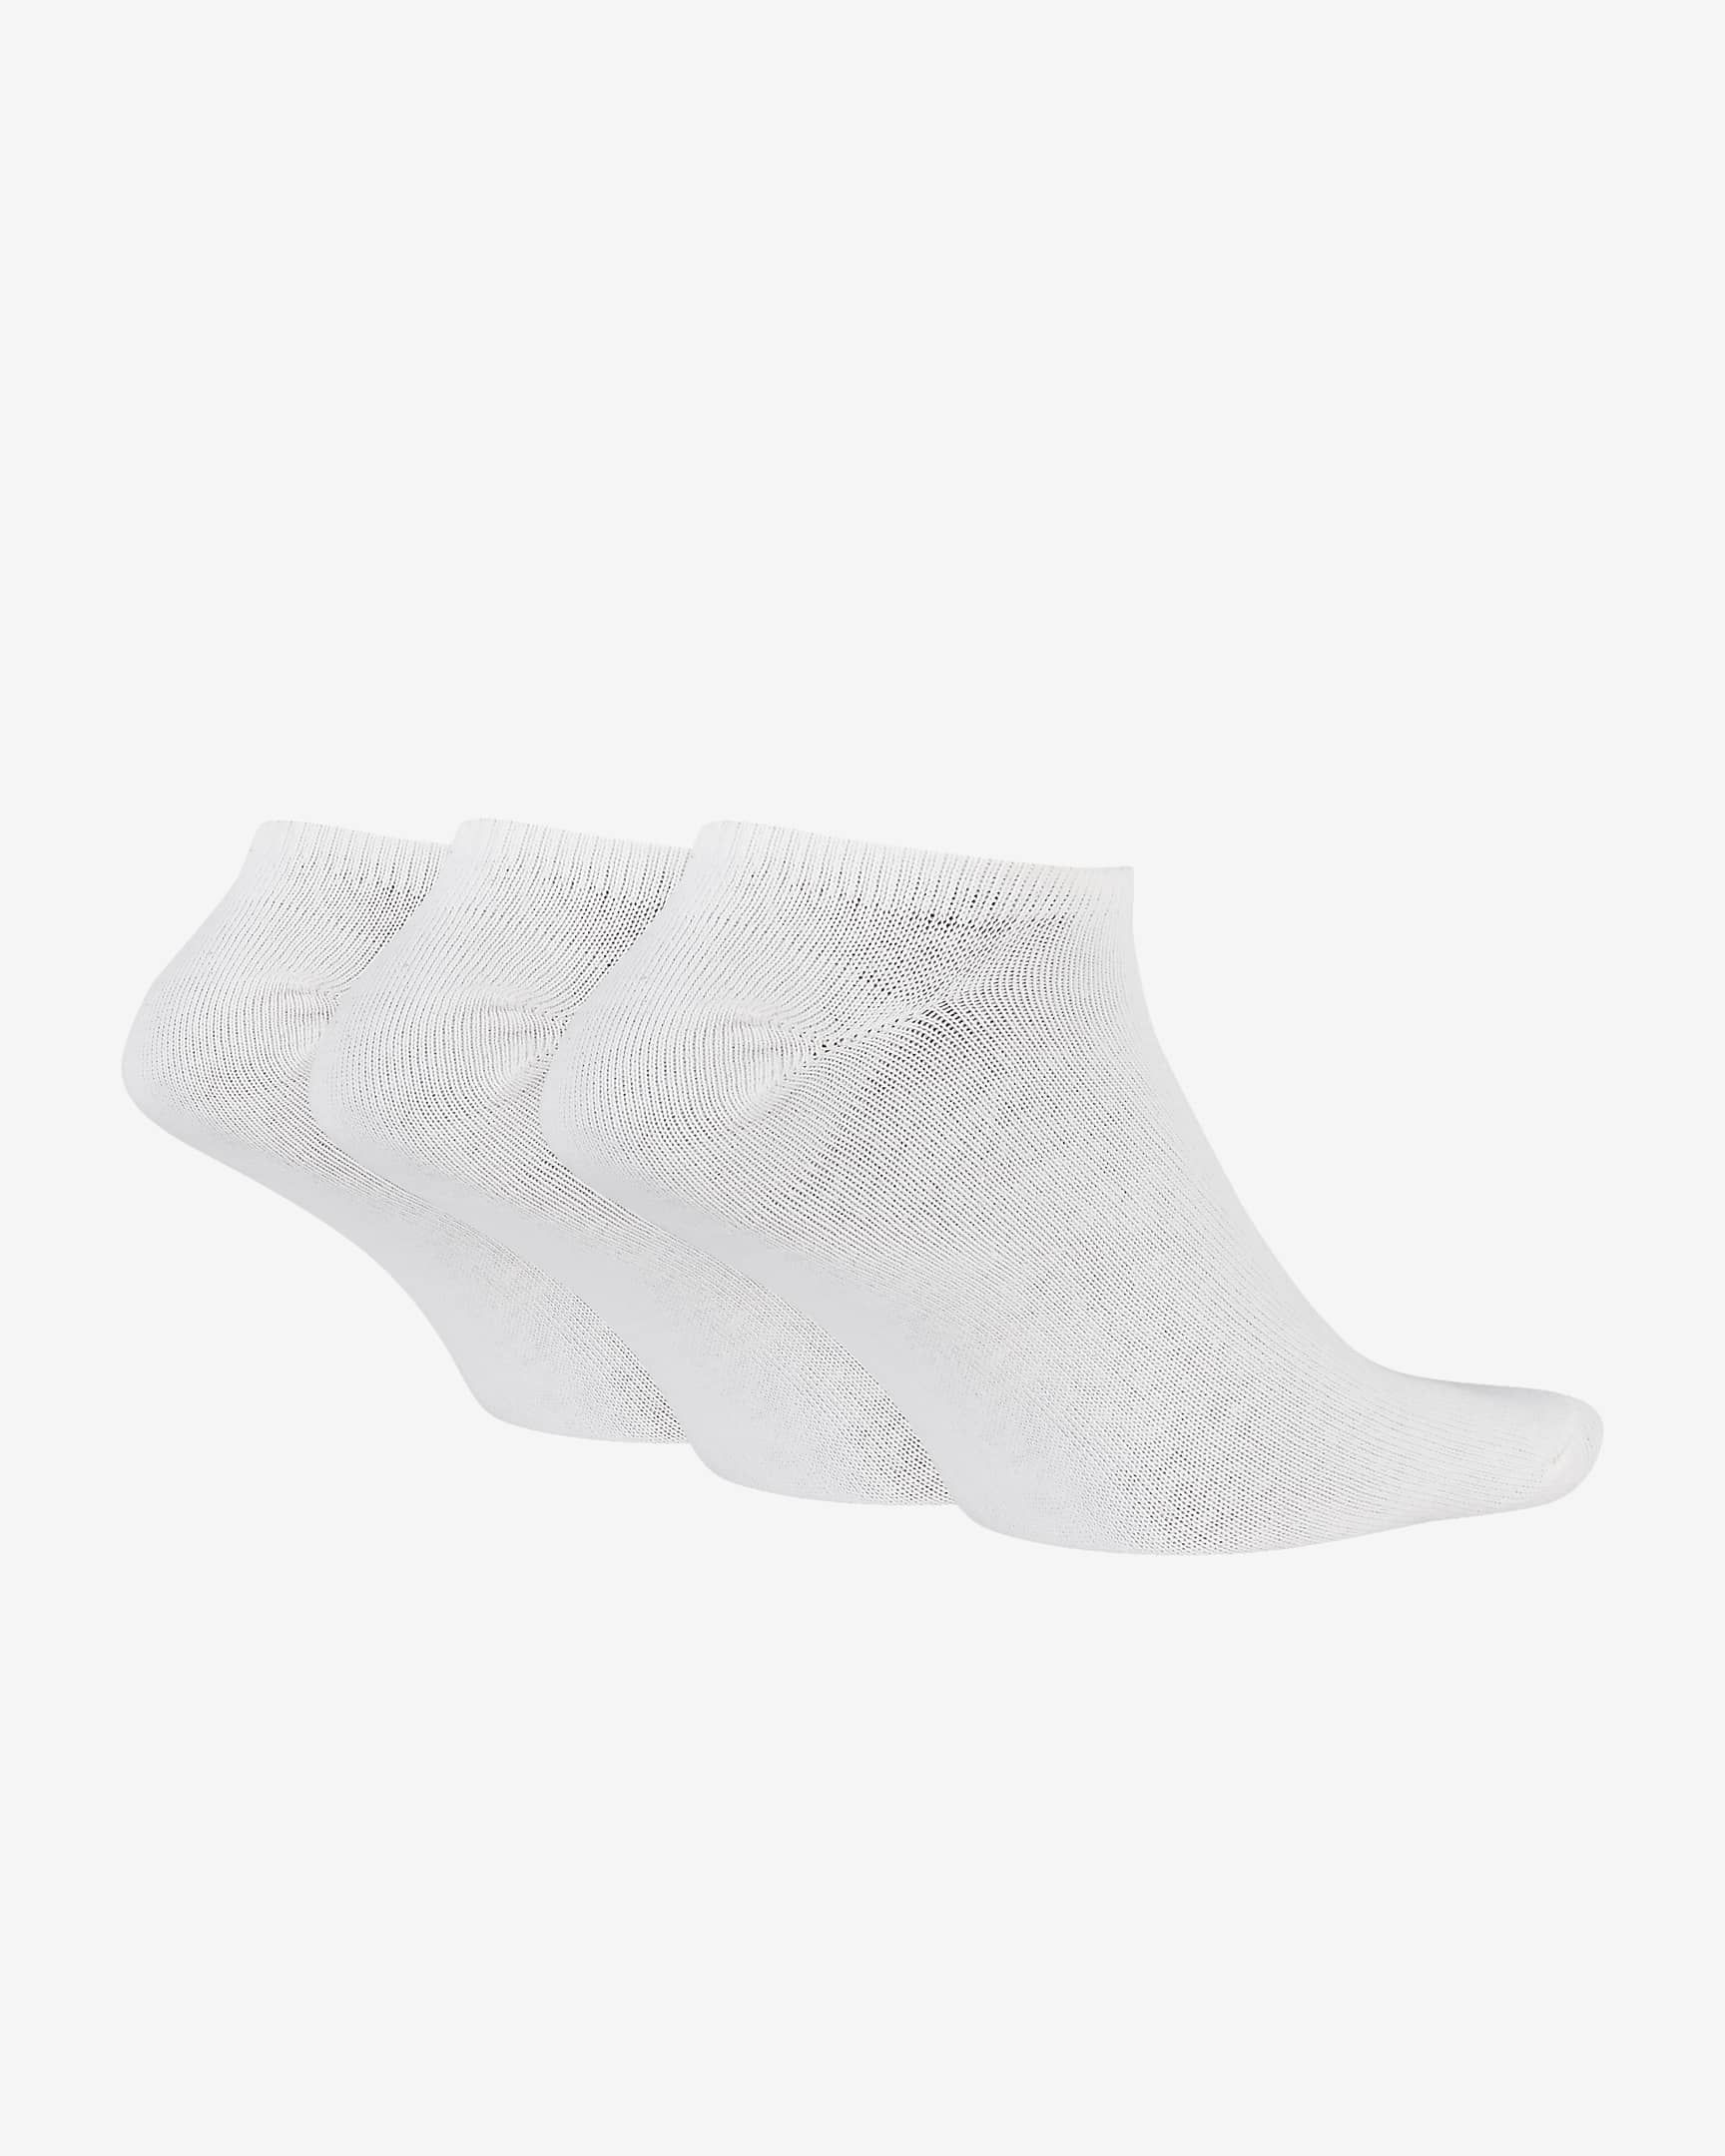 Nike Lightweight Training No-Show Socks (3 Pairs) - White/Black